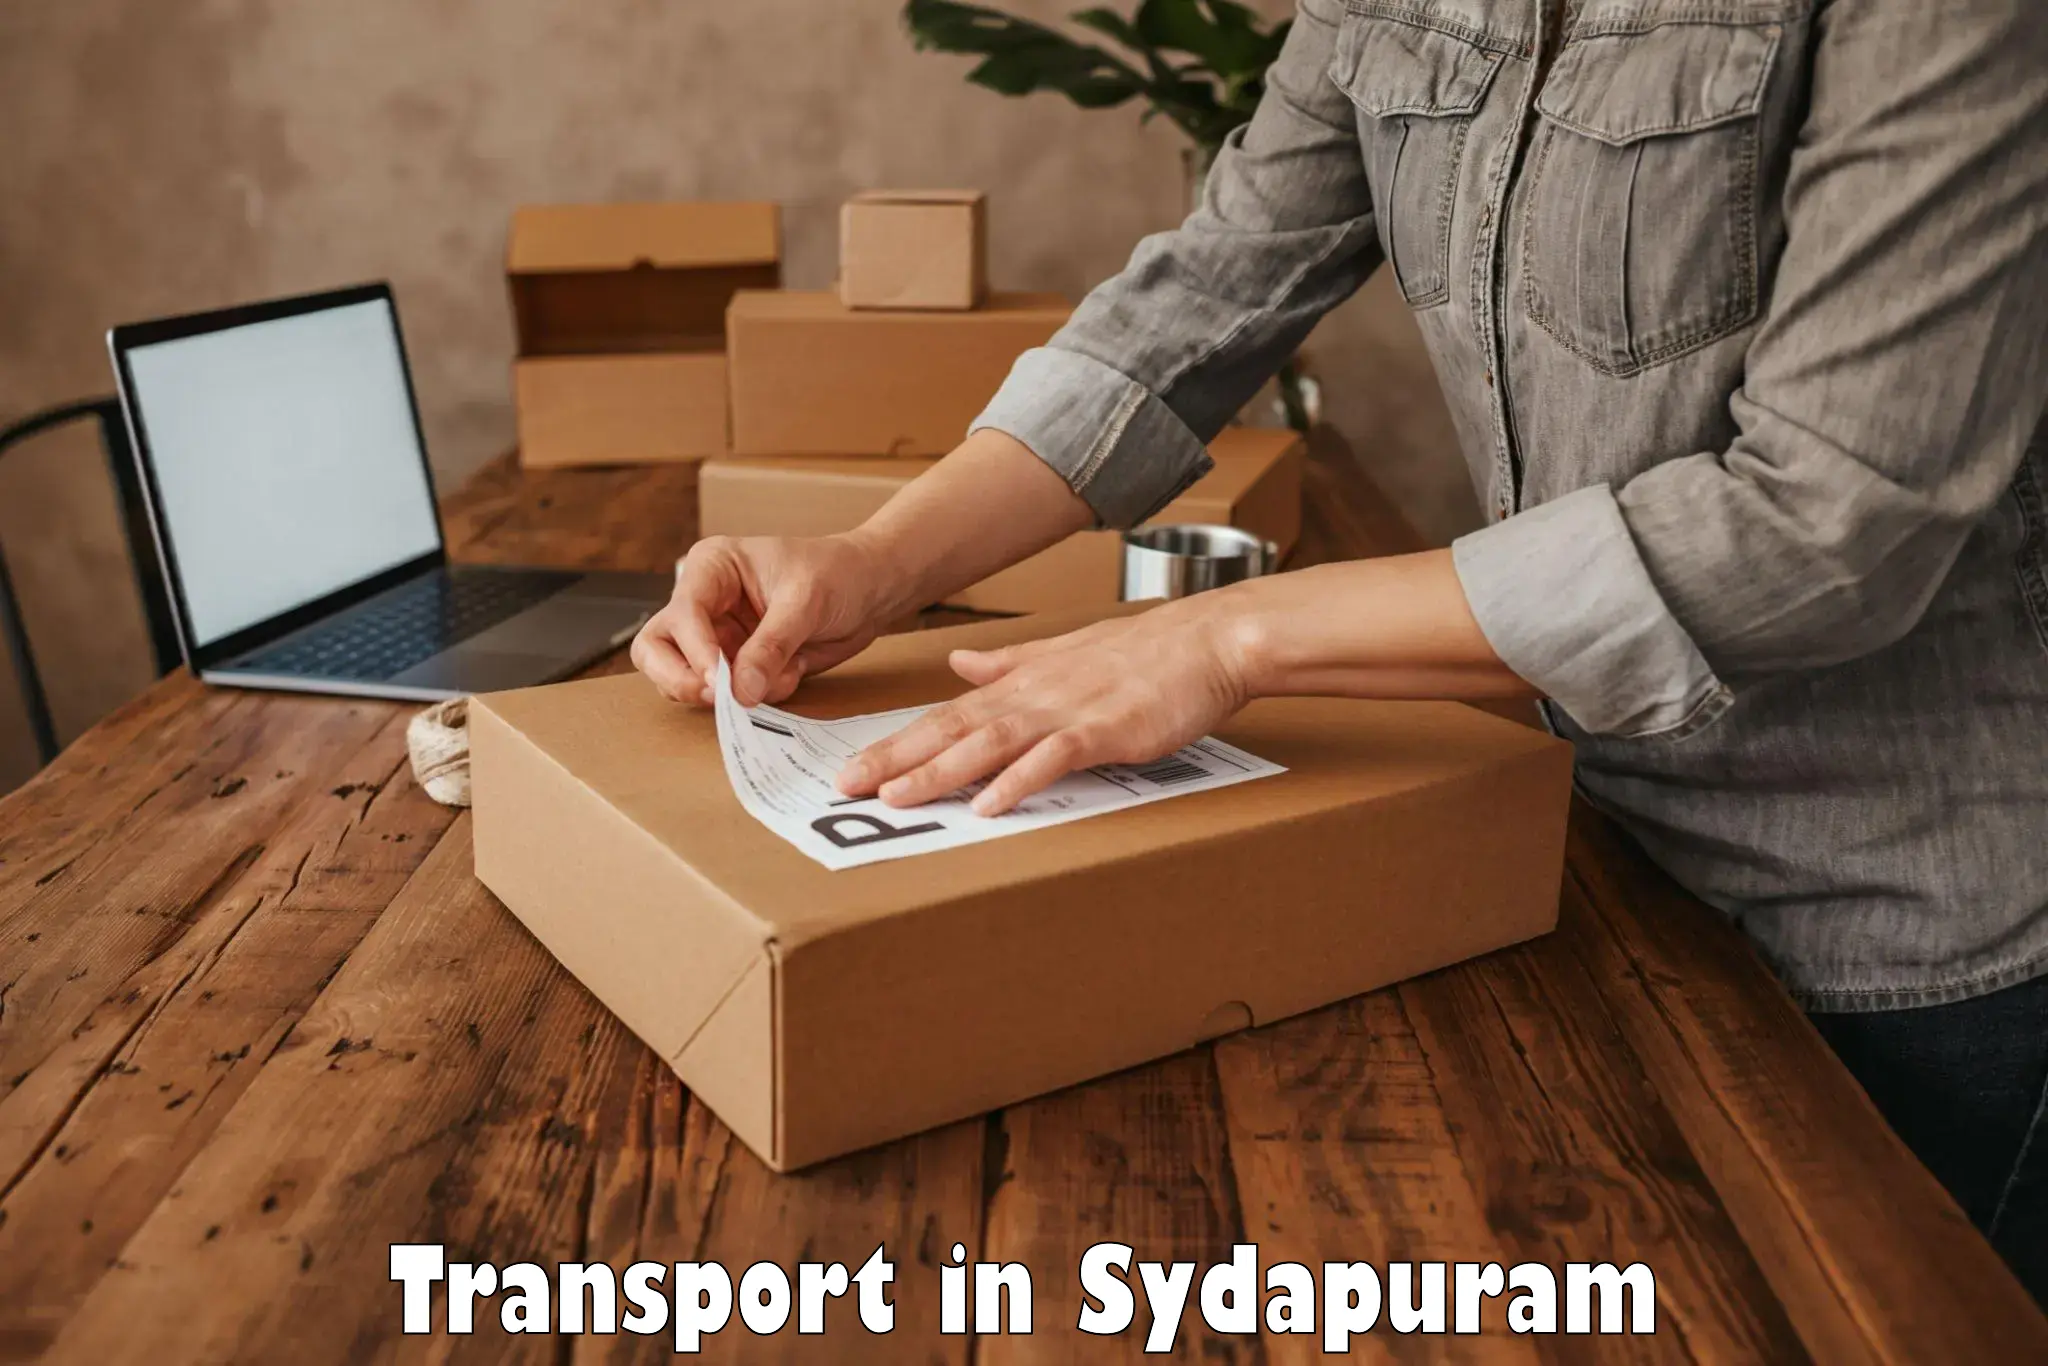 Vehicle transport services in Sydapuram